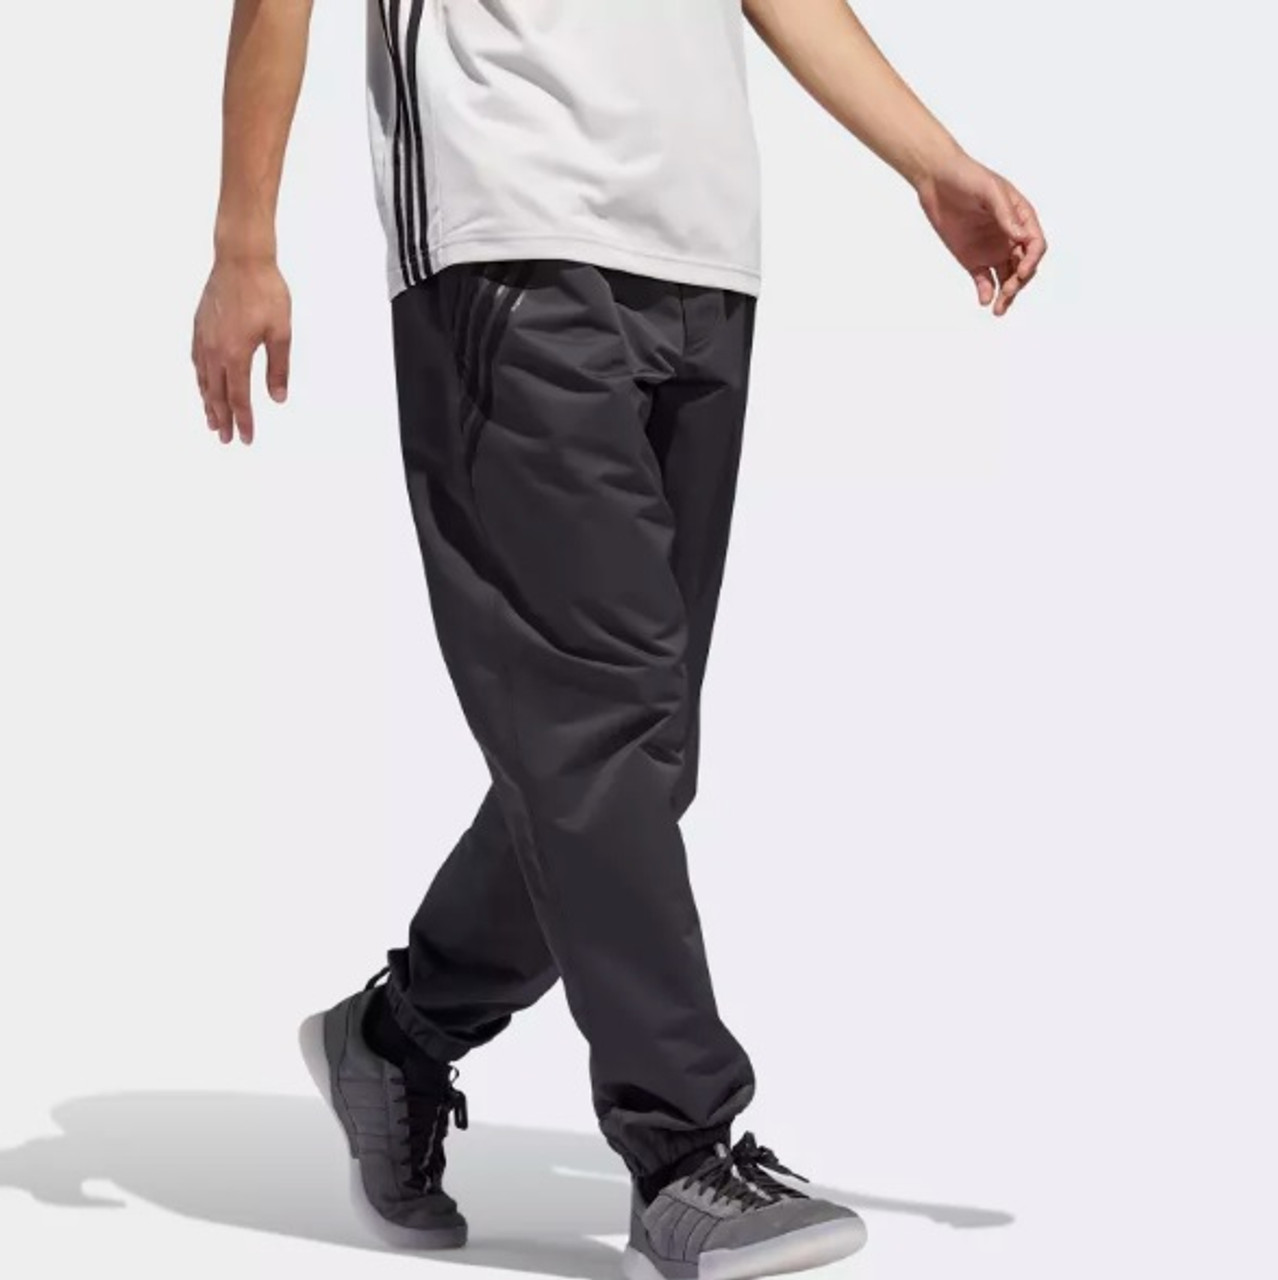 Adidas X Numbers Pants Black Grey | Boardparadise.com